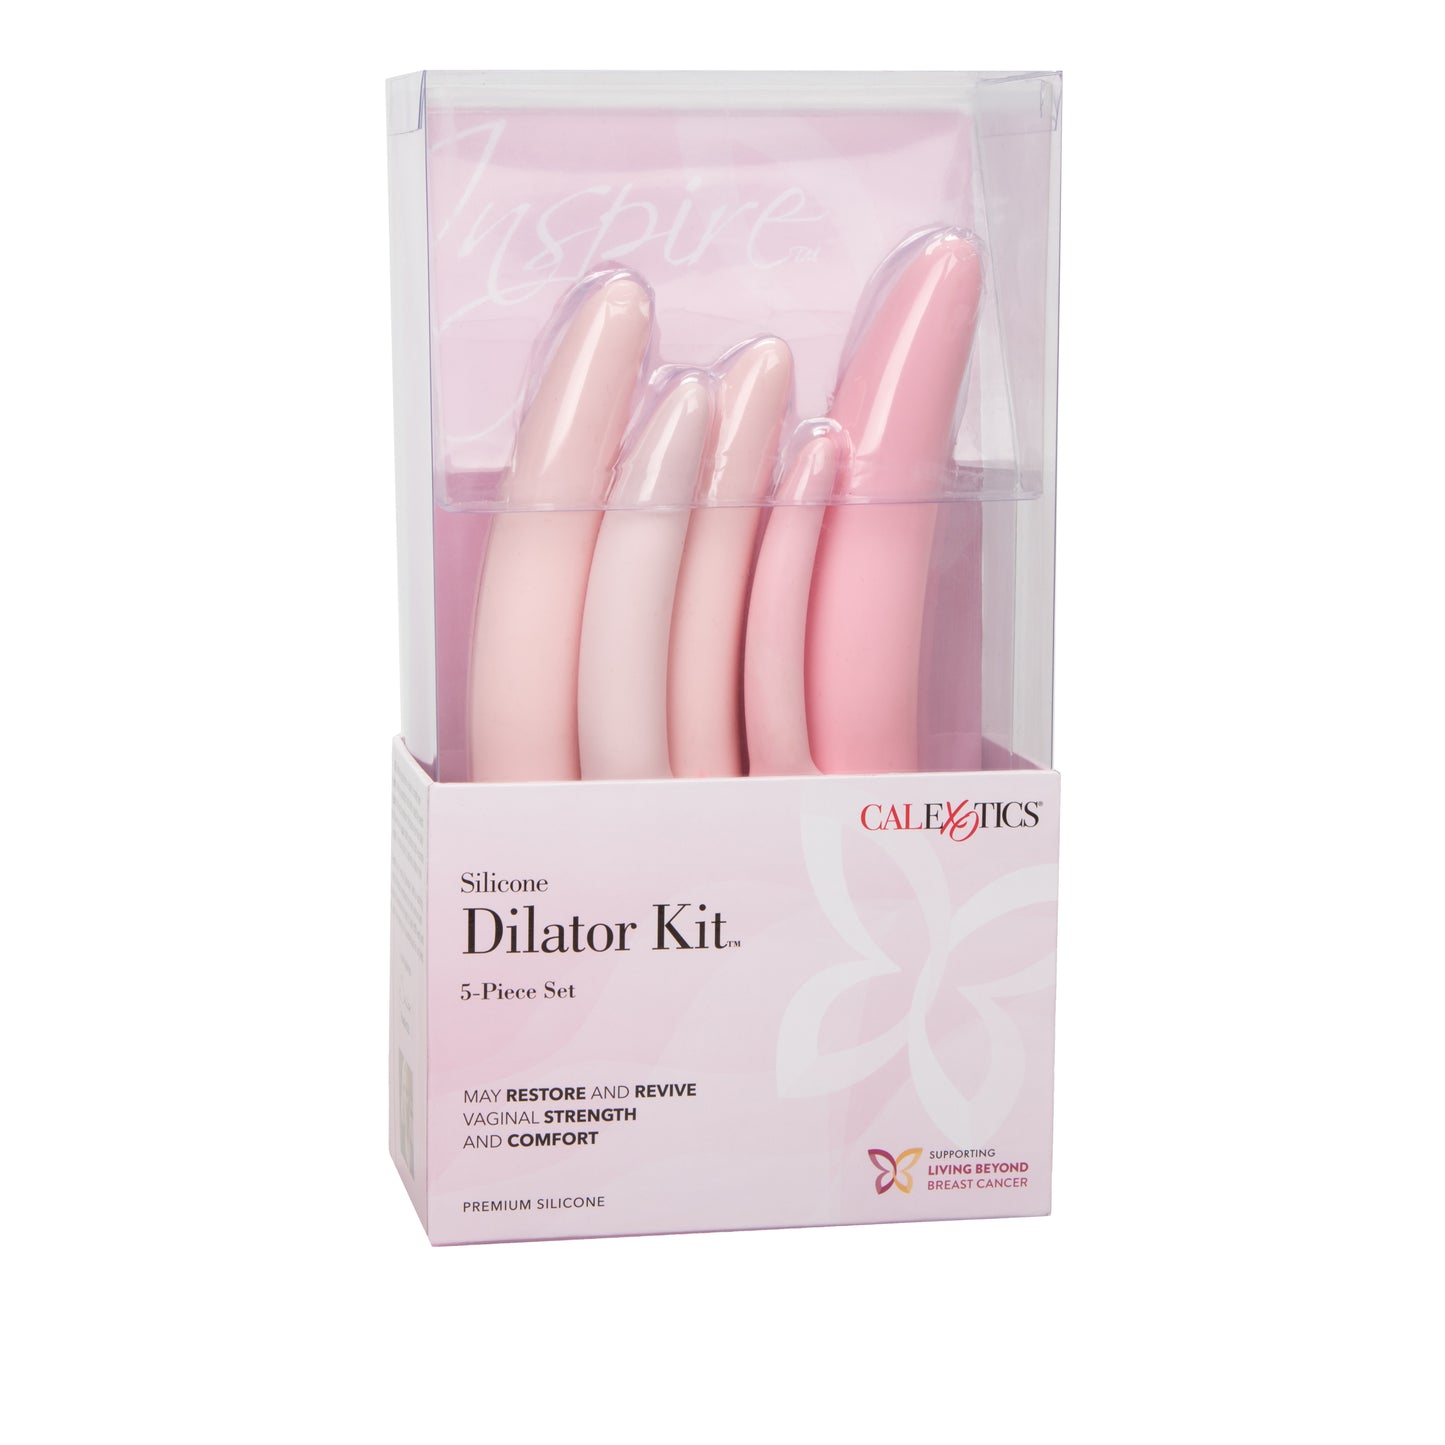 Inspire® Silicone Dilator Kit 5-Piece Set